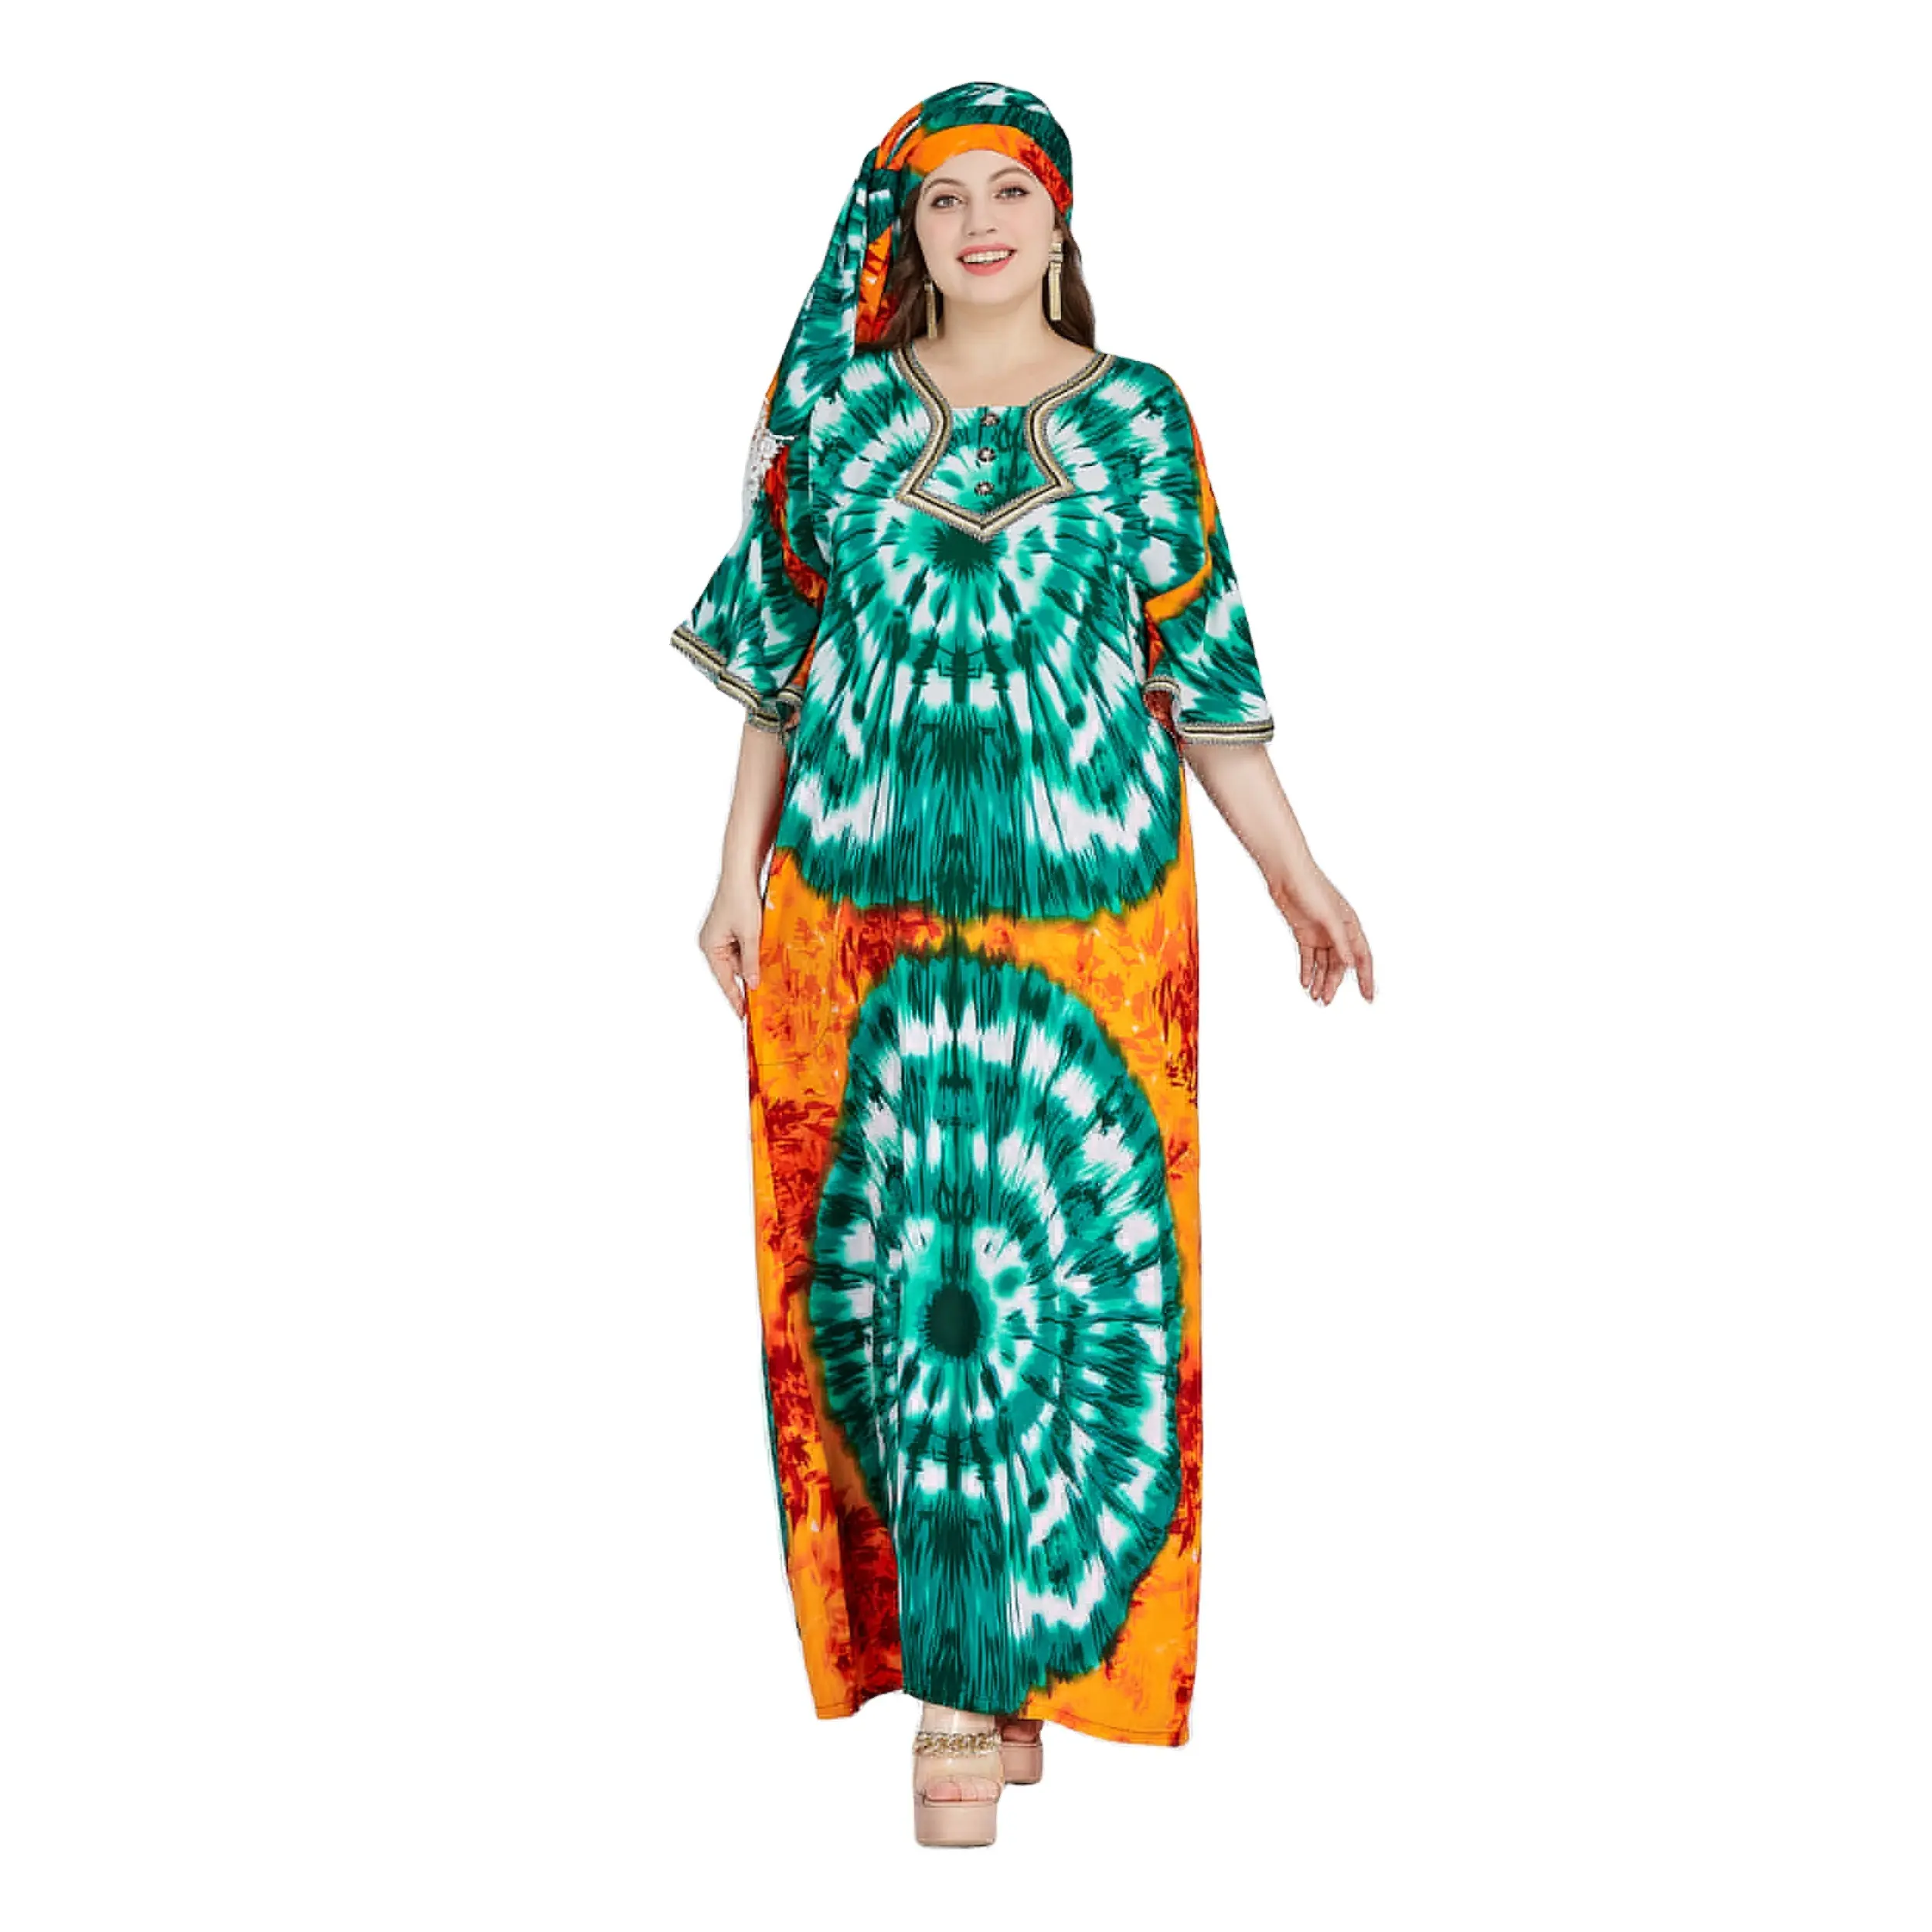 Vestido casual feminino com botões de renda e bandana decorativa kitenge africano, novo estilo